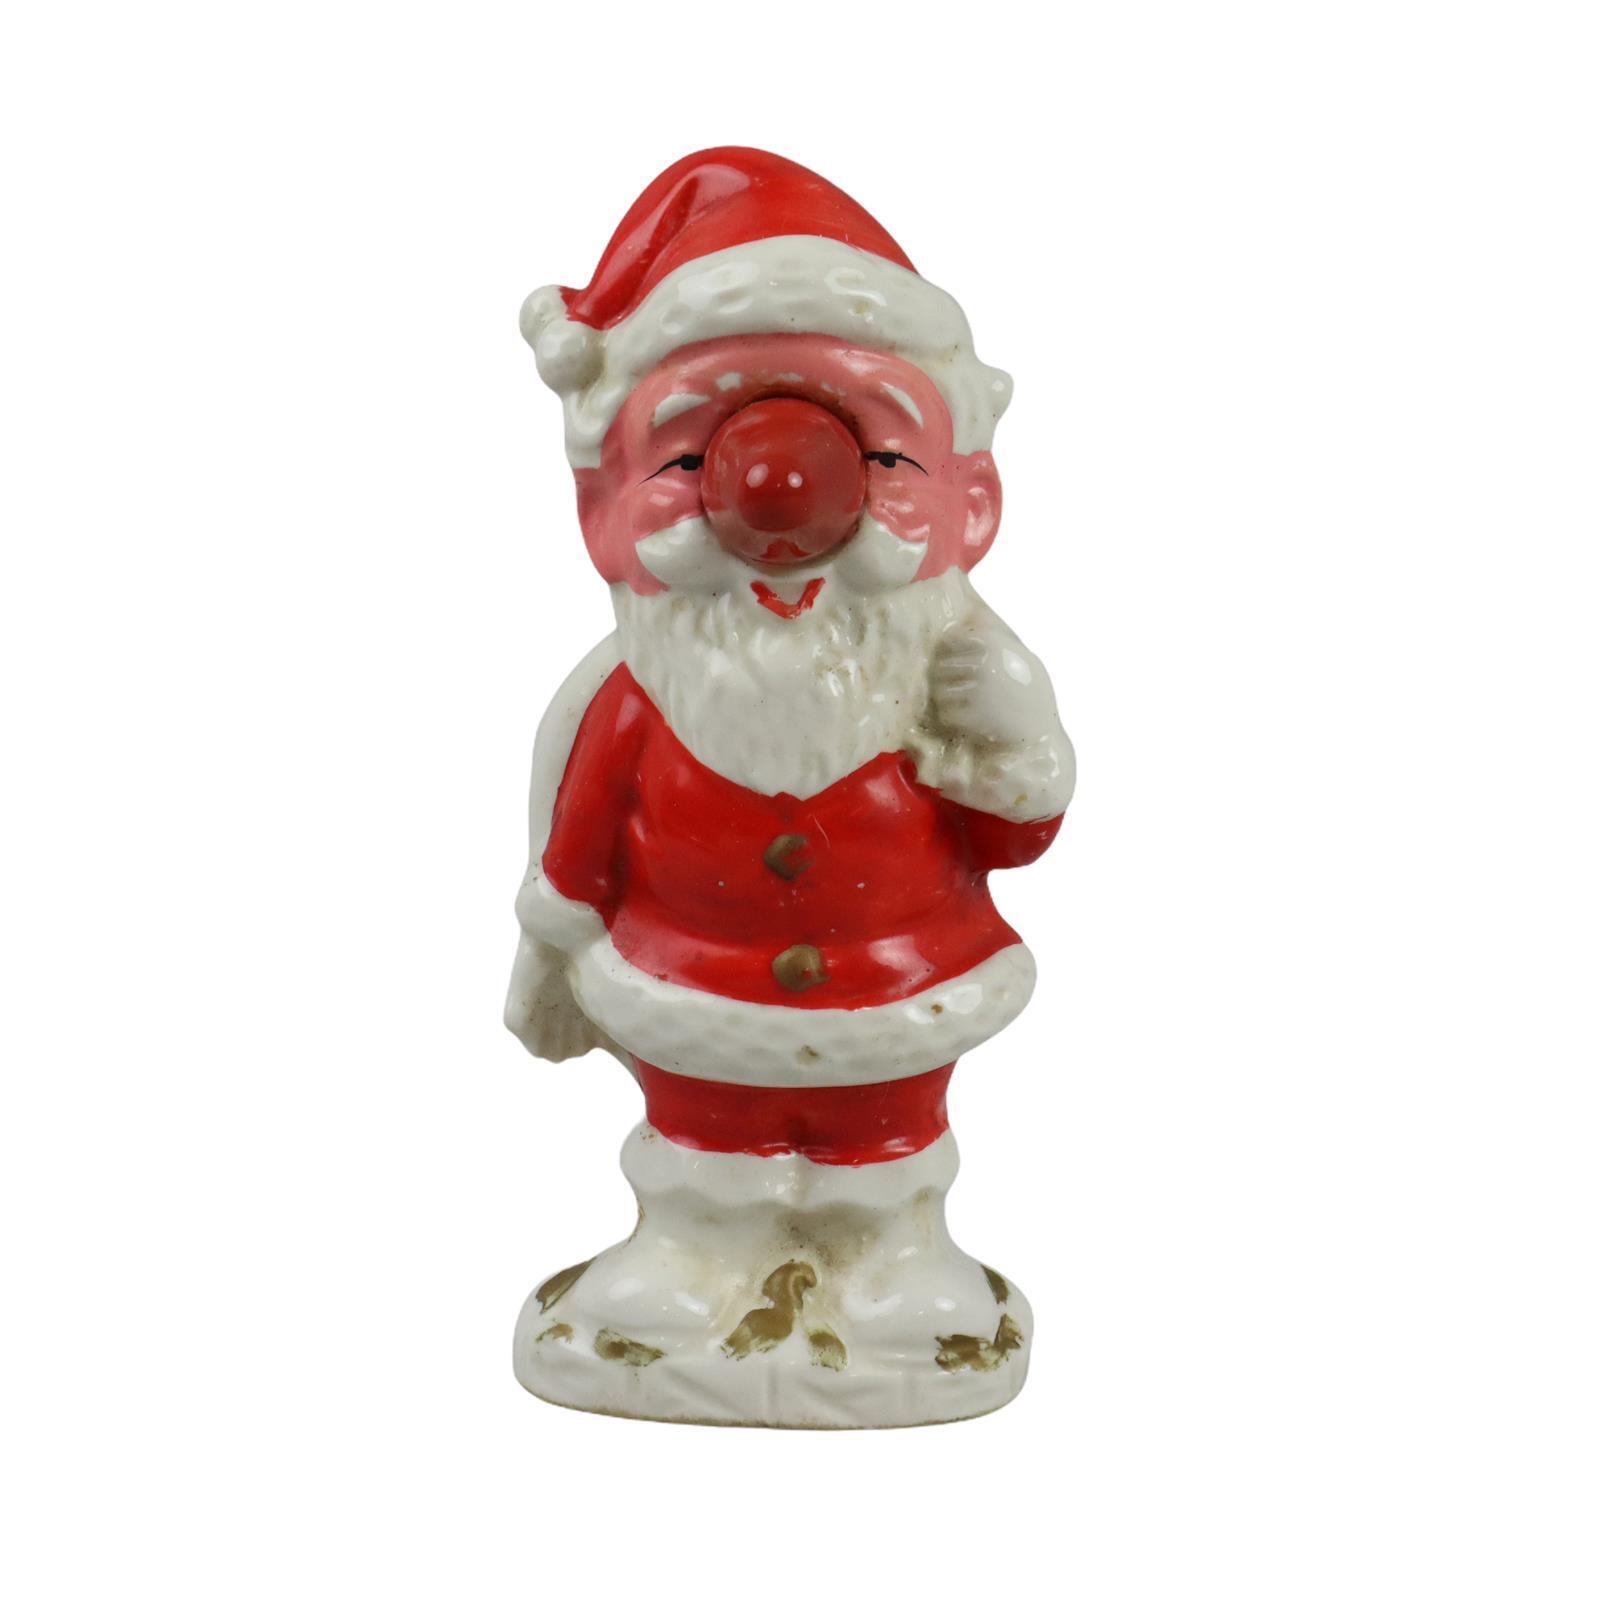 Unique Santa Claus with Giant Red Nose Figurine c1950s